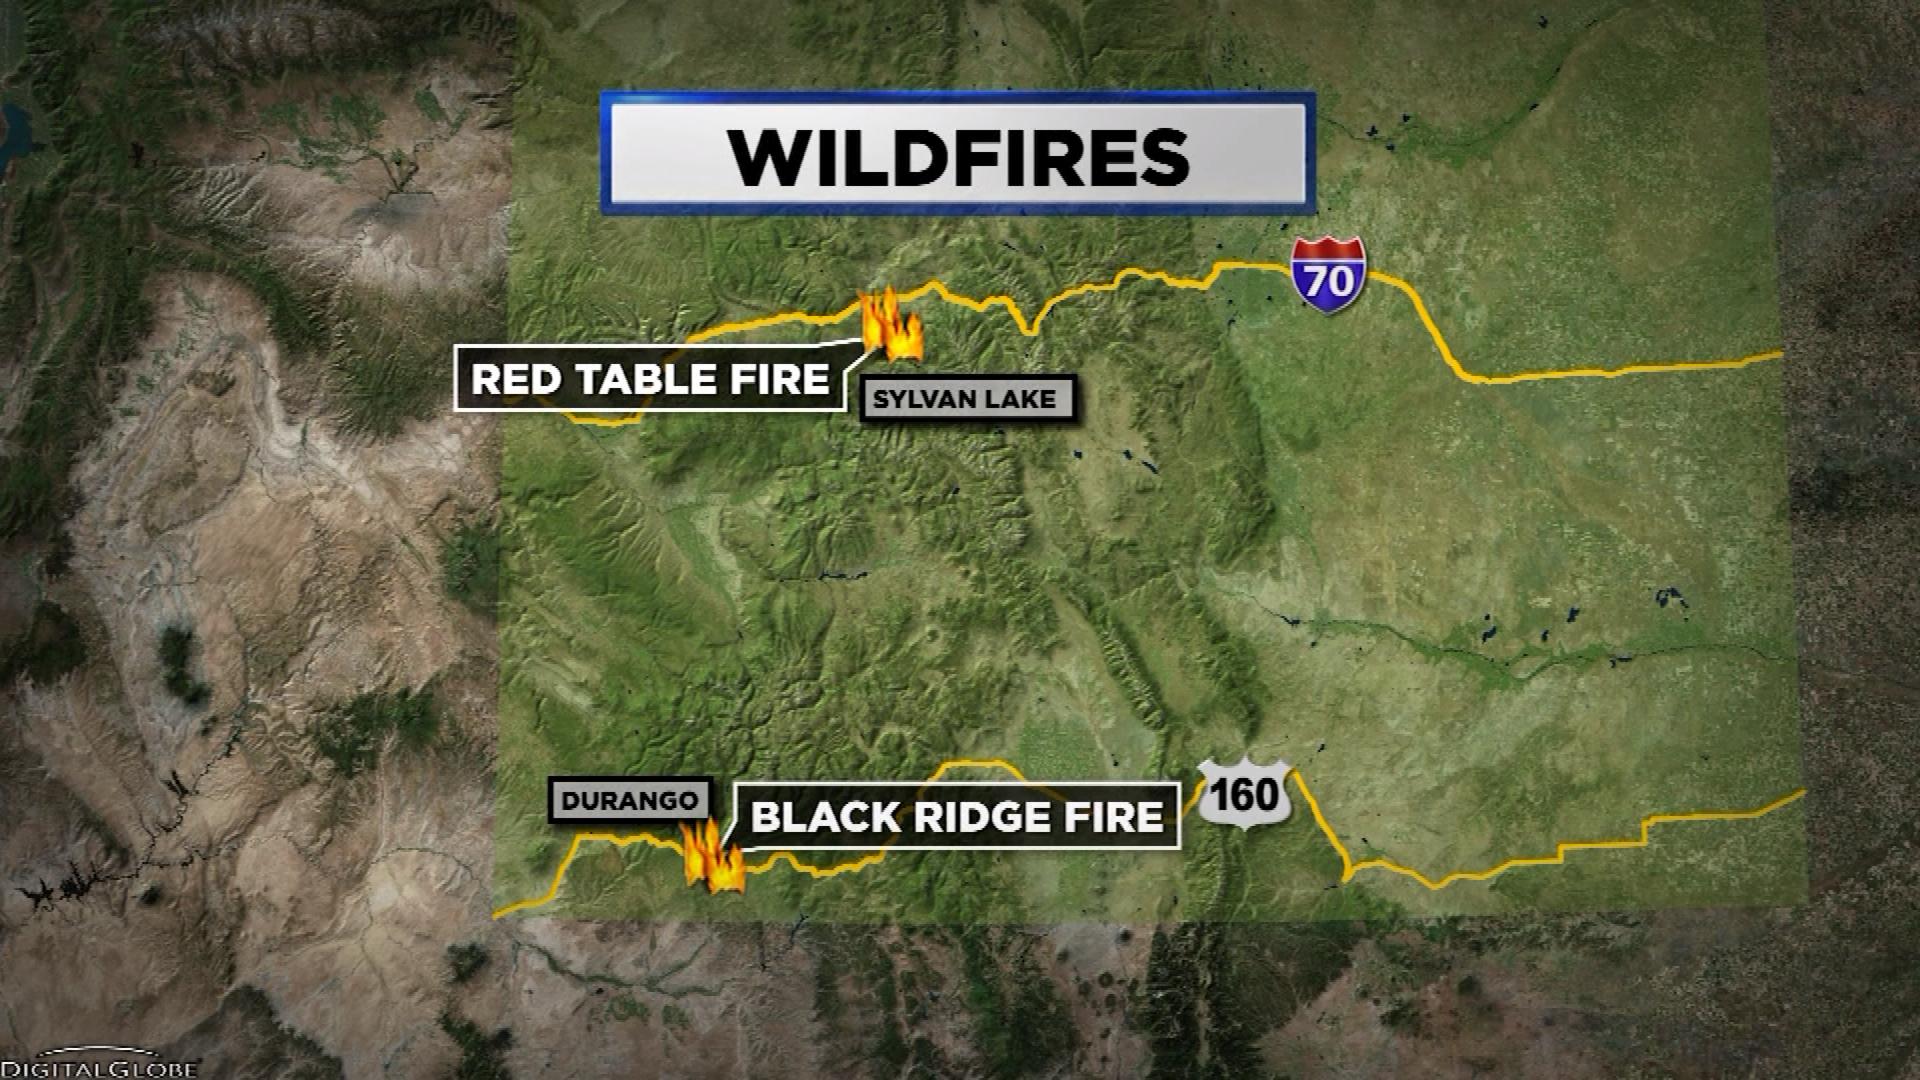 Red Table Fire, Black Ridge Fire